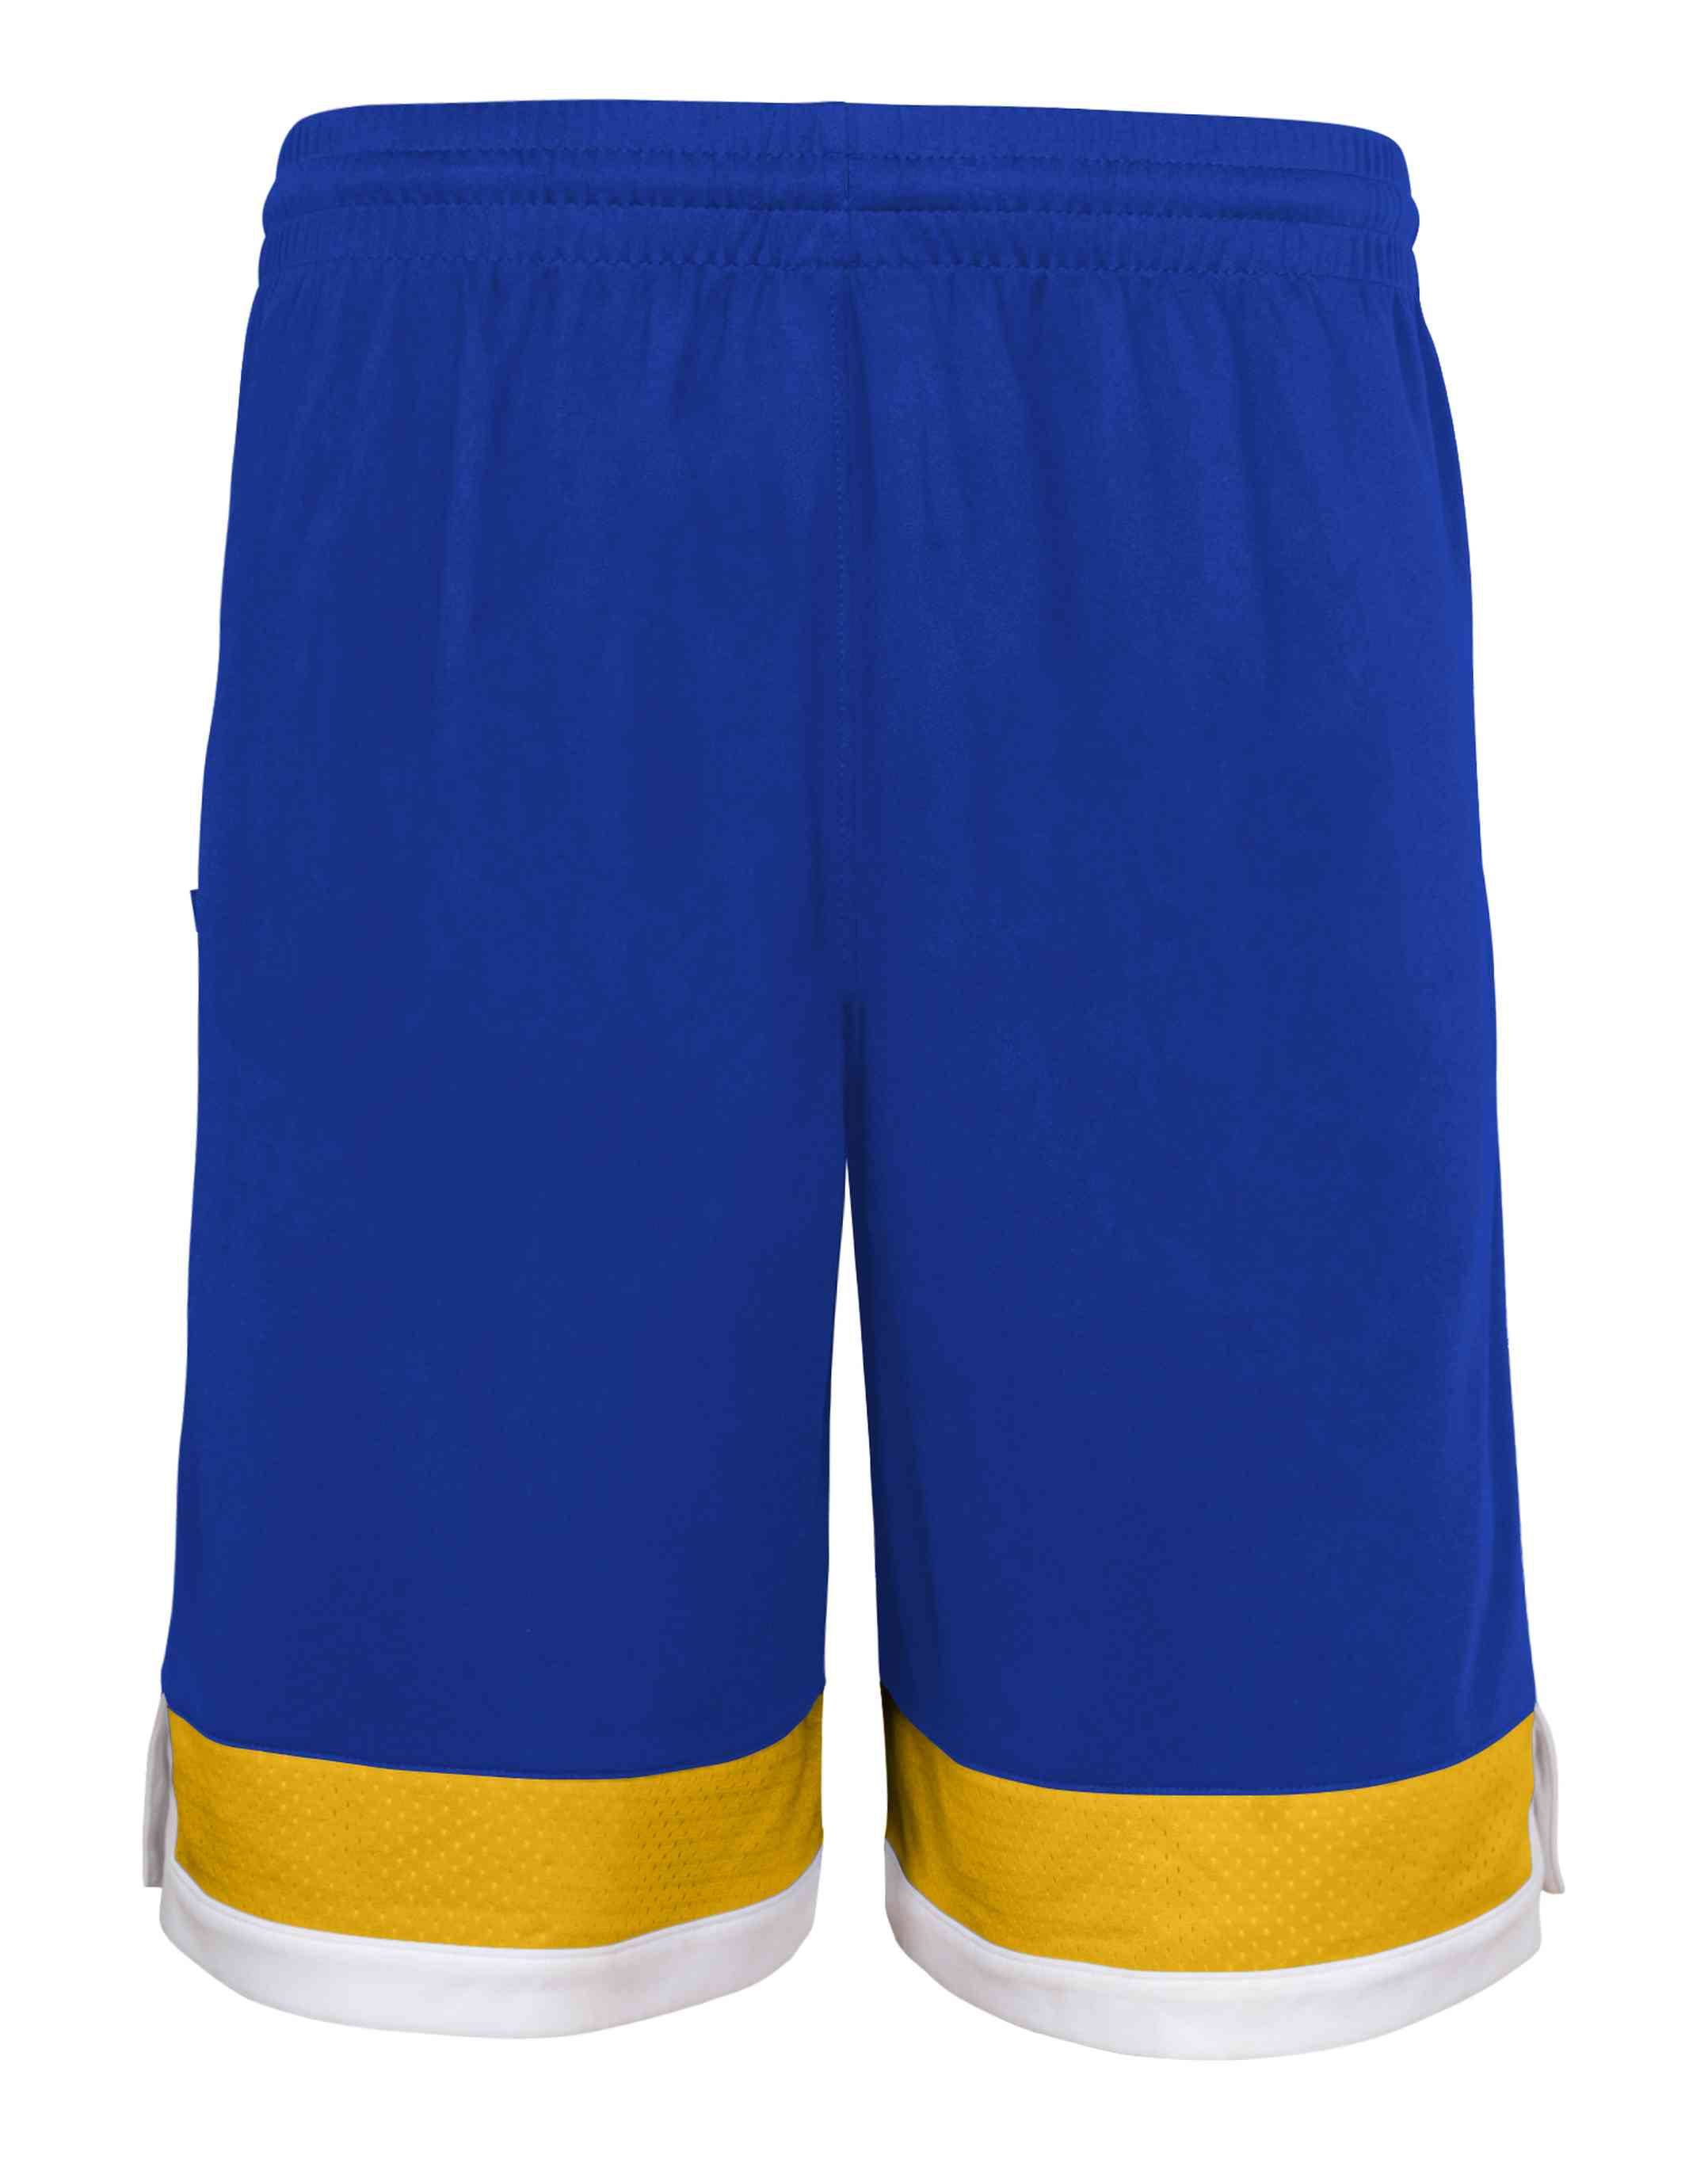 Outerstuff - NBA Golden State Warriors Stephen Curry Active Basketball Shorts